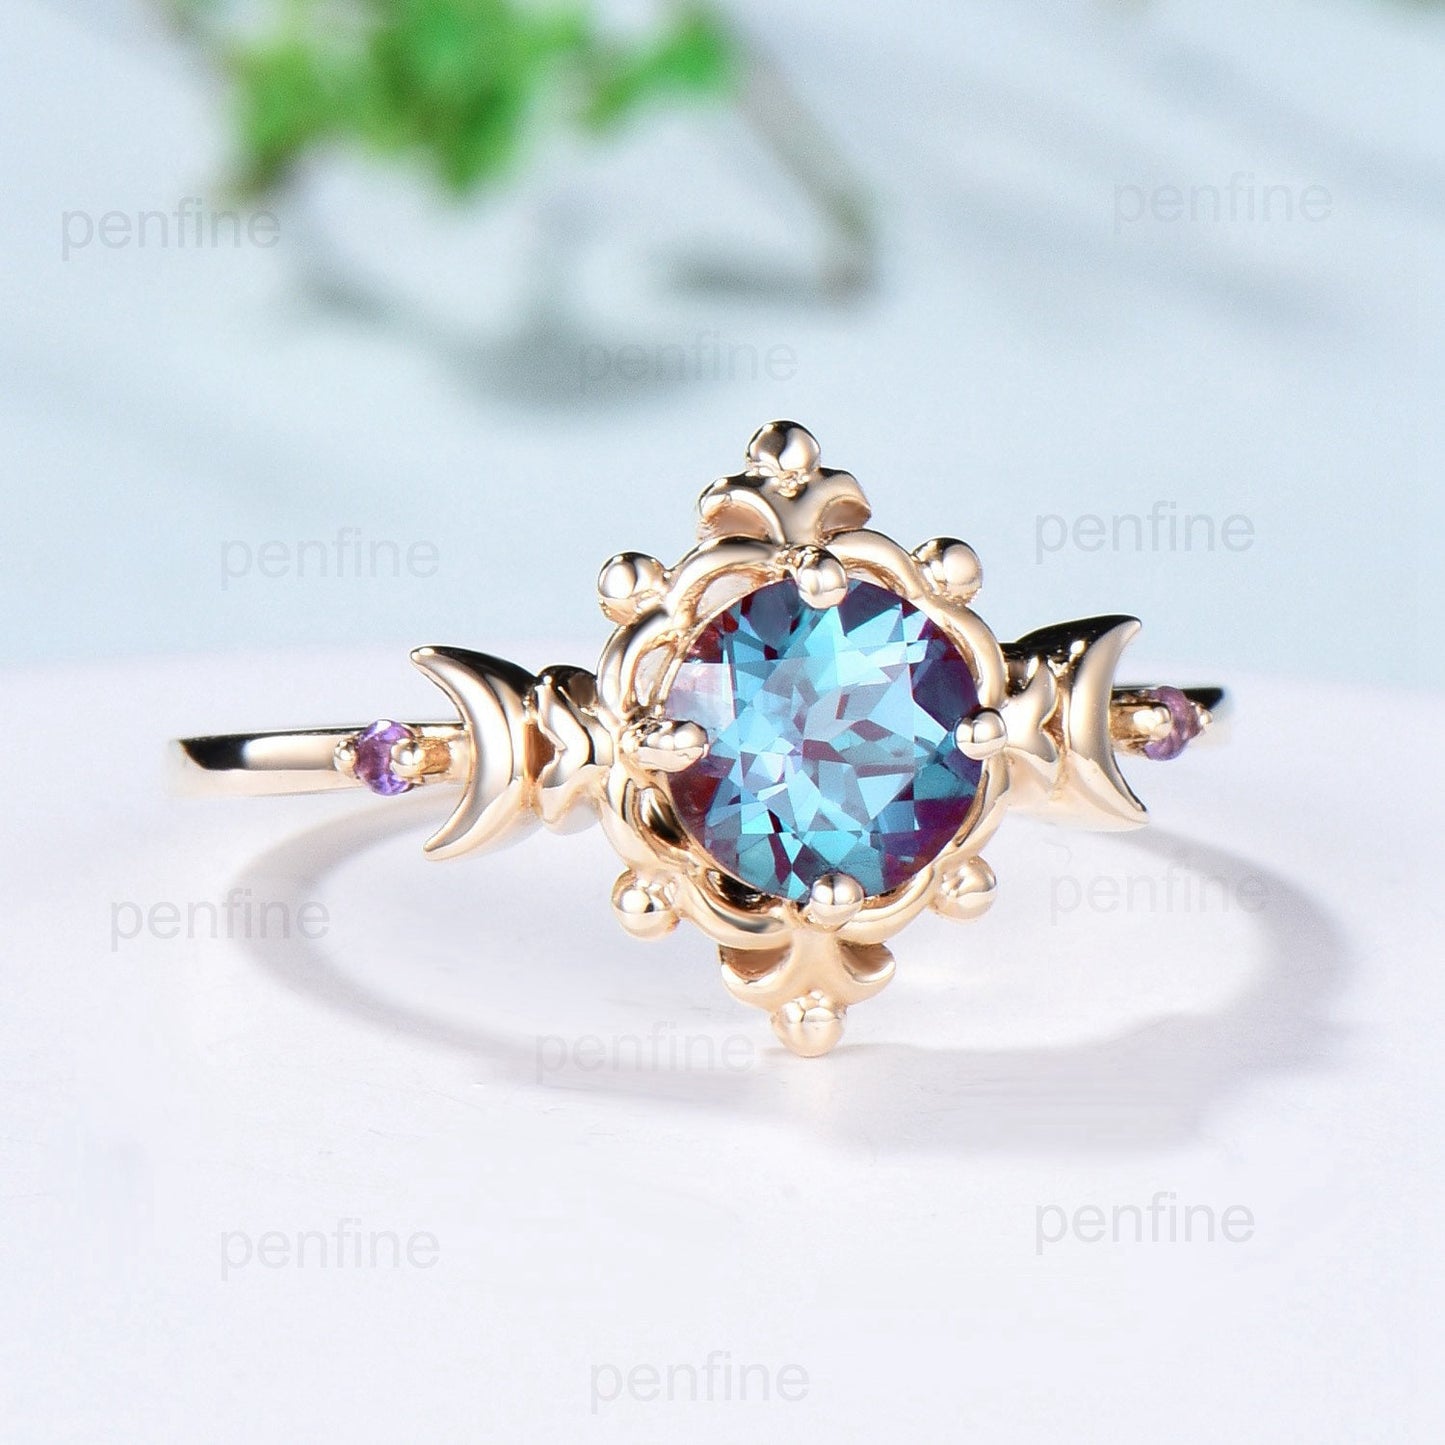 Vintage Alexandrite Ring Set Magic Crescent Moon Floral Alexandrite Engagement Ring Color Change Cluster Amethyst Opal Wedding Set for Women - PENFINE